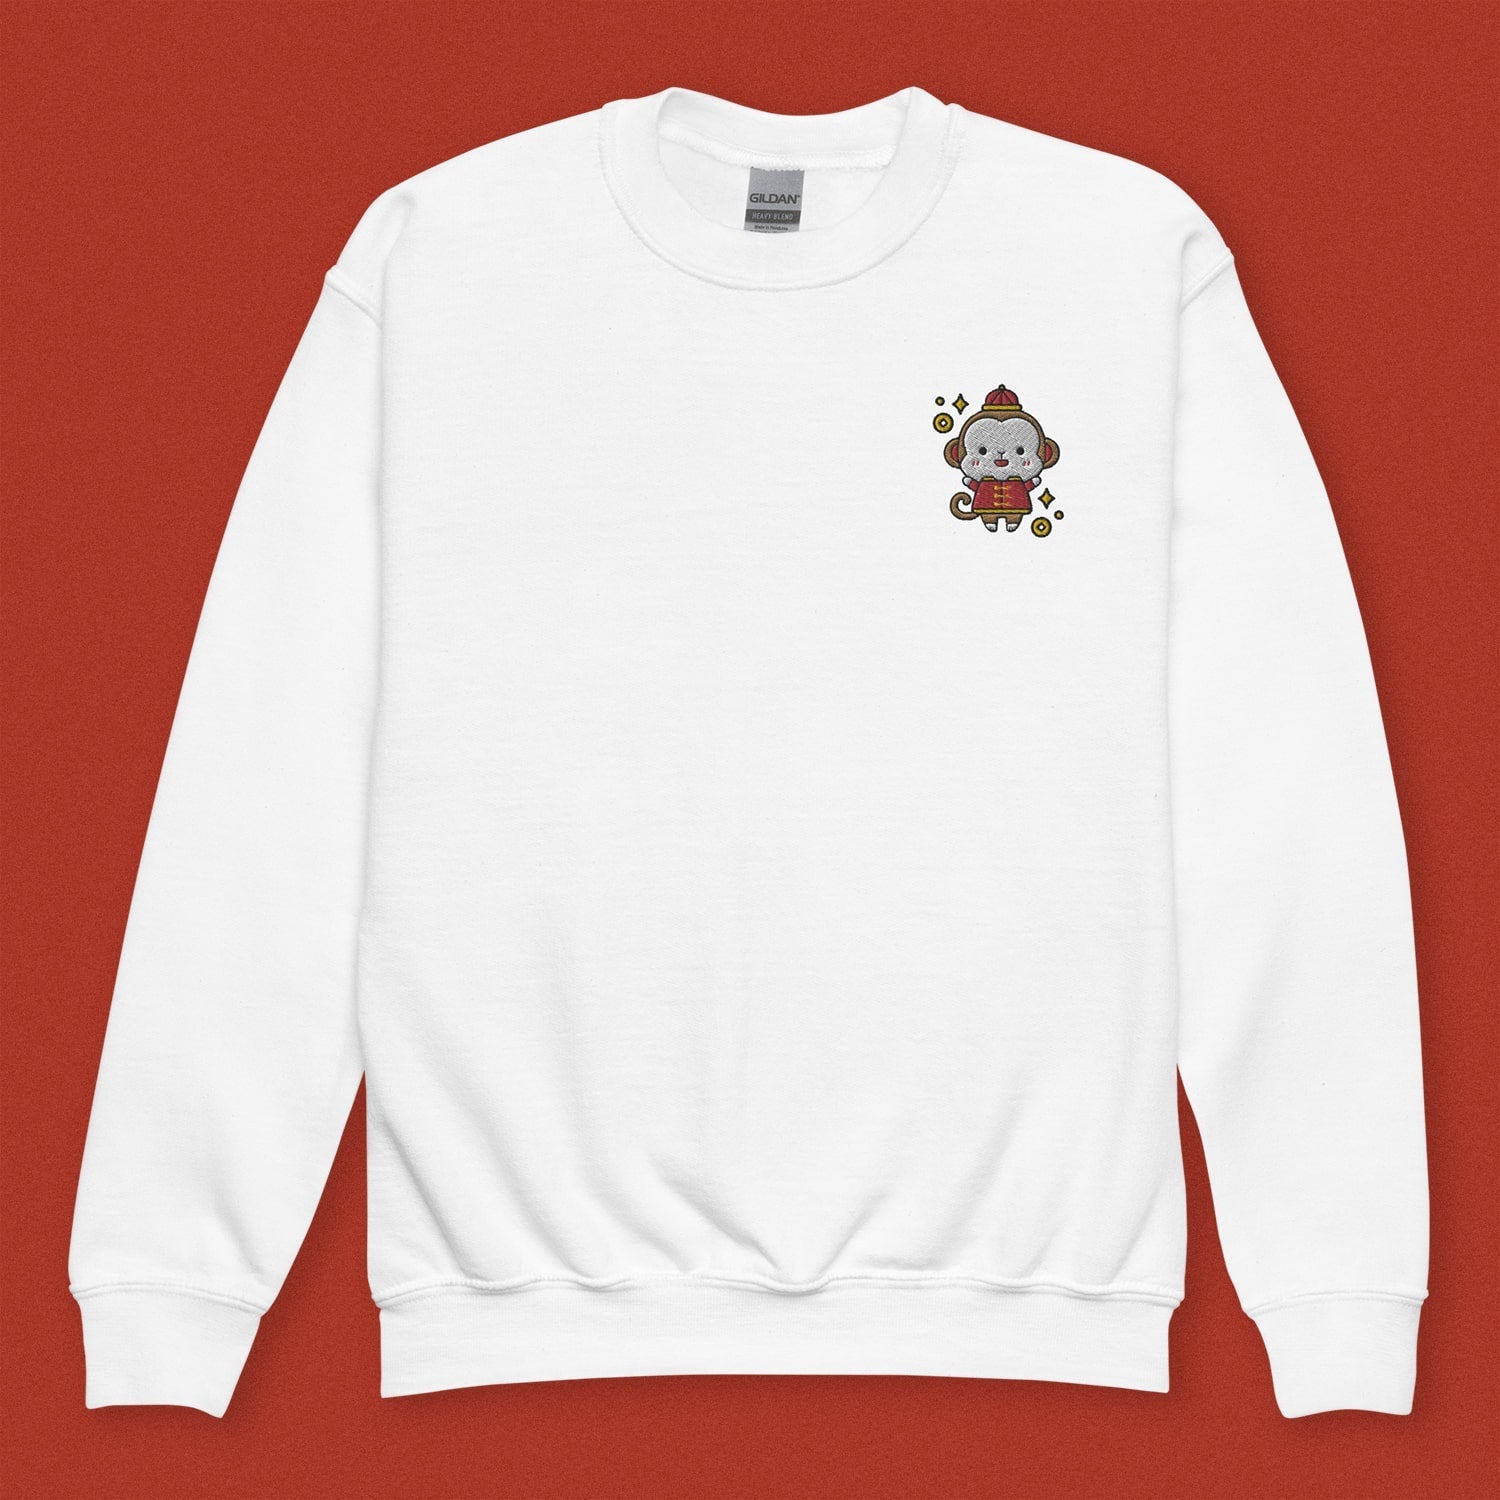 Year of the Monkey Embroidered Kids Sweatshirt - Ni De Mama Chinese Clothing